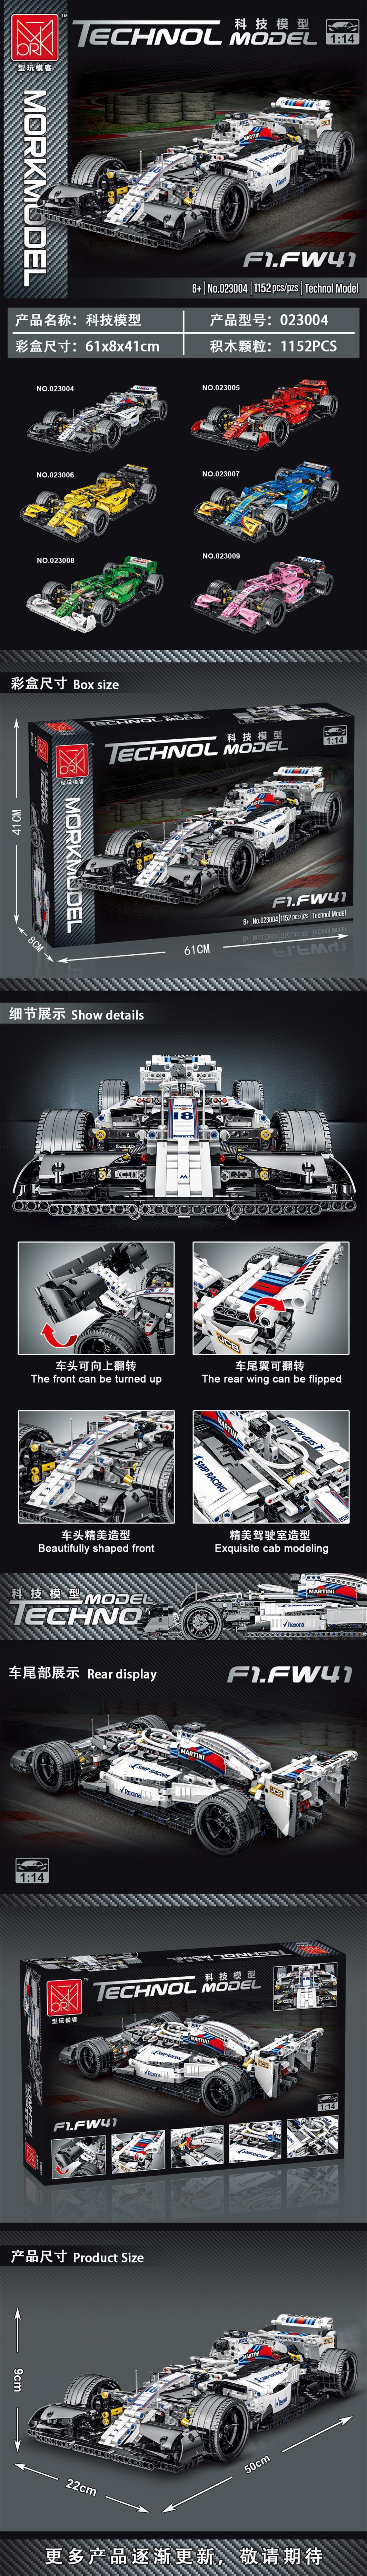 MORK 023004 White Formula Technology Sports Car Model Building Bricks Toy Sett